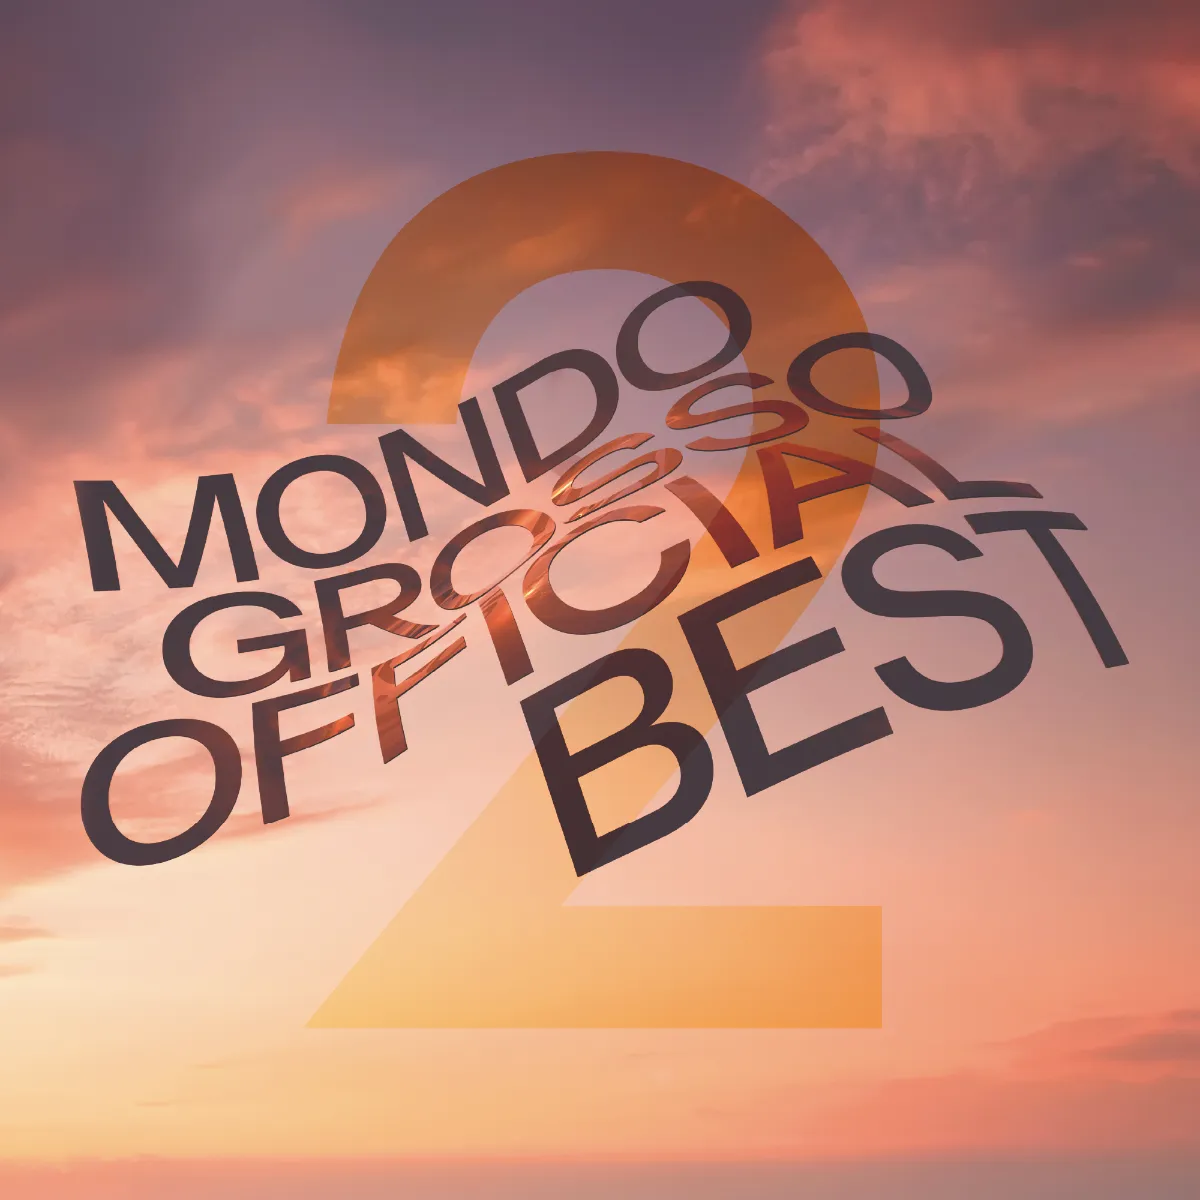 MONDO GROOSO OFFICAL BEST 」アナログ盤 2022年4月20日発売 